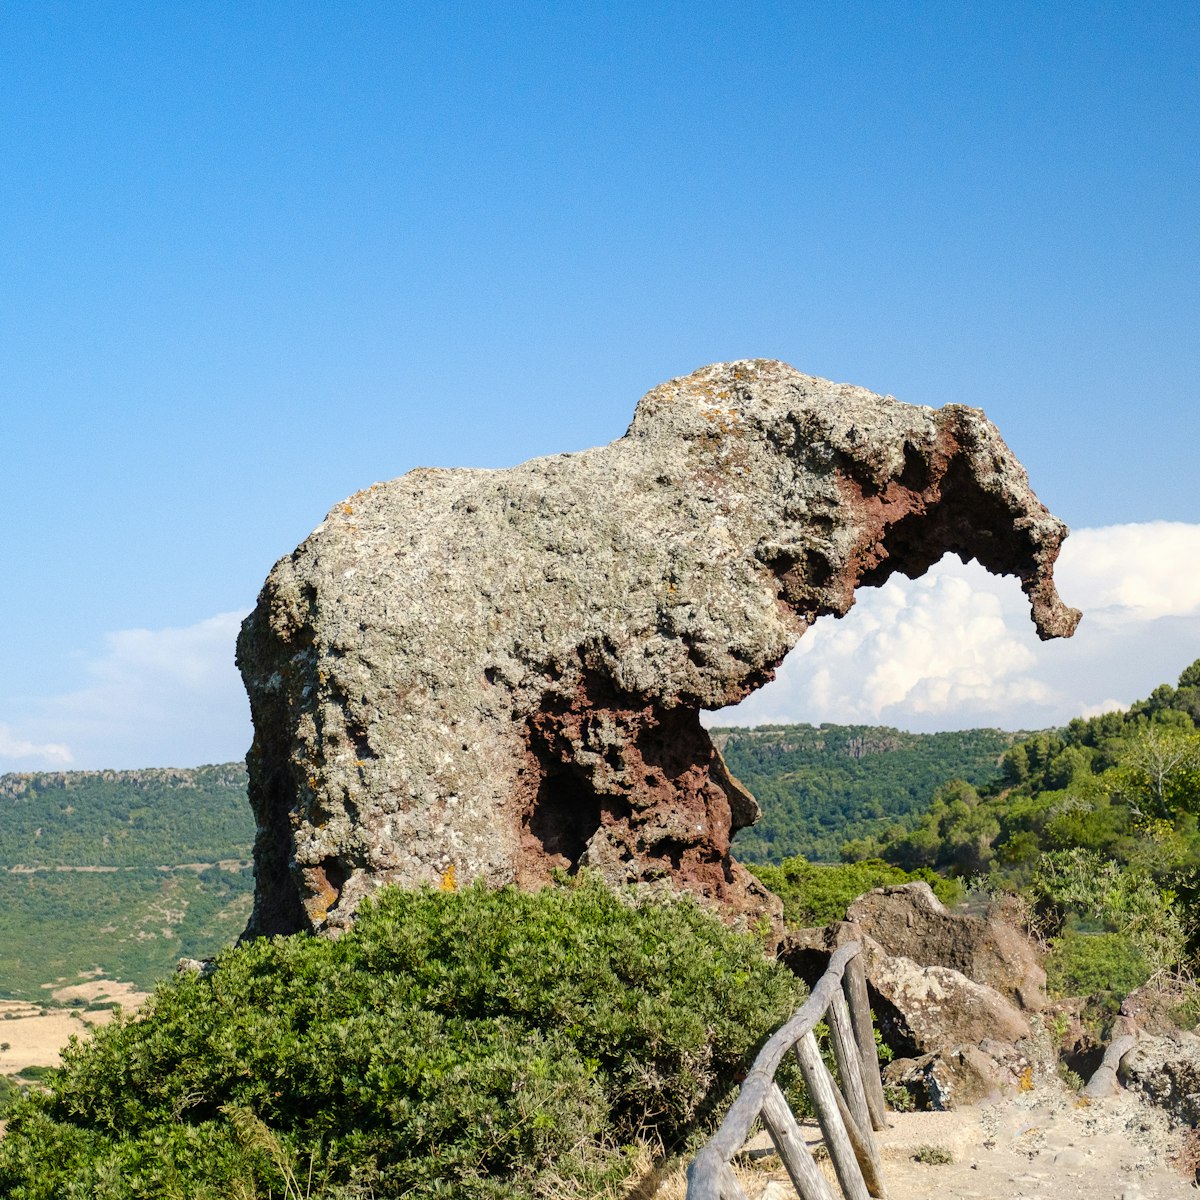 Roccia dell'Elefante, or Elephant rock, on Sardinia.